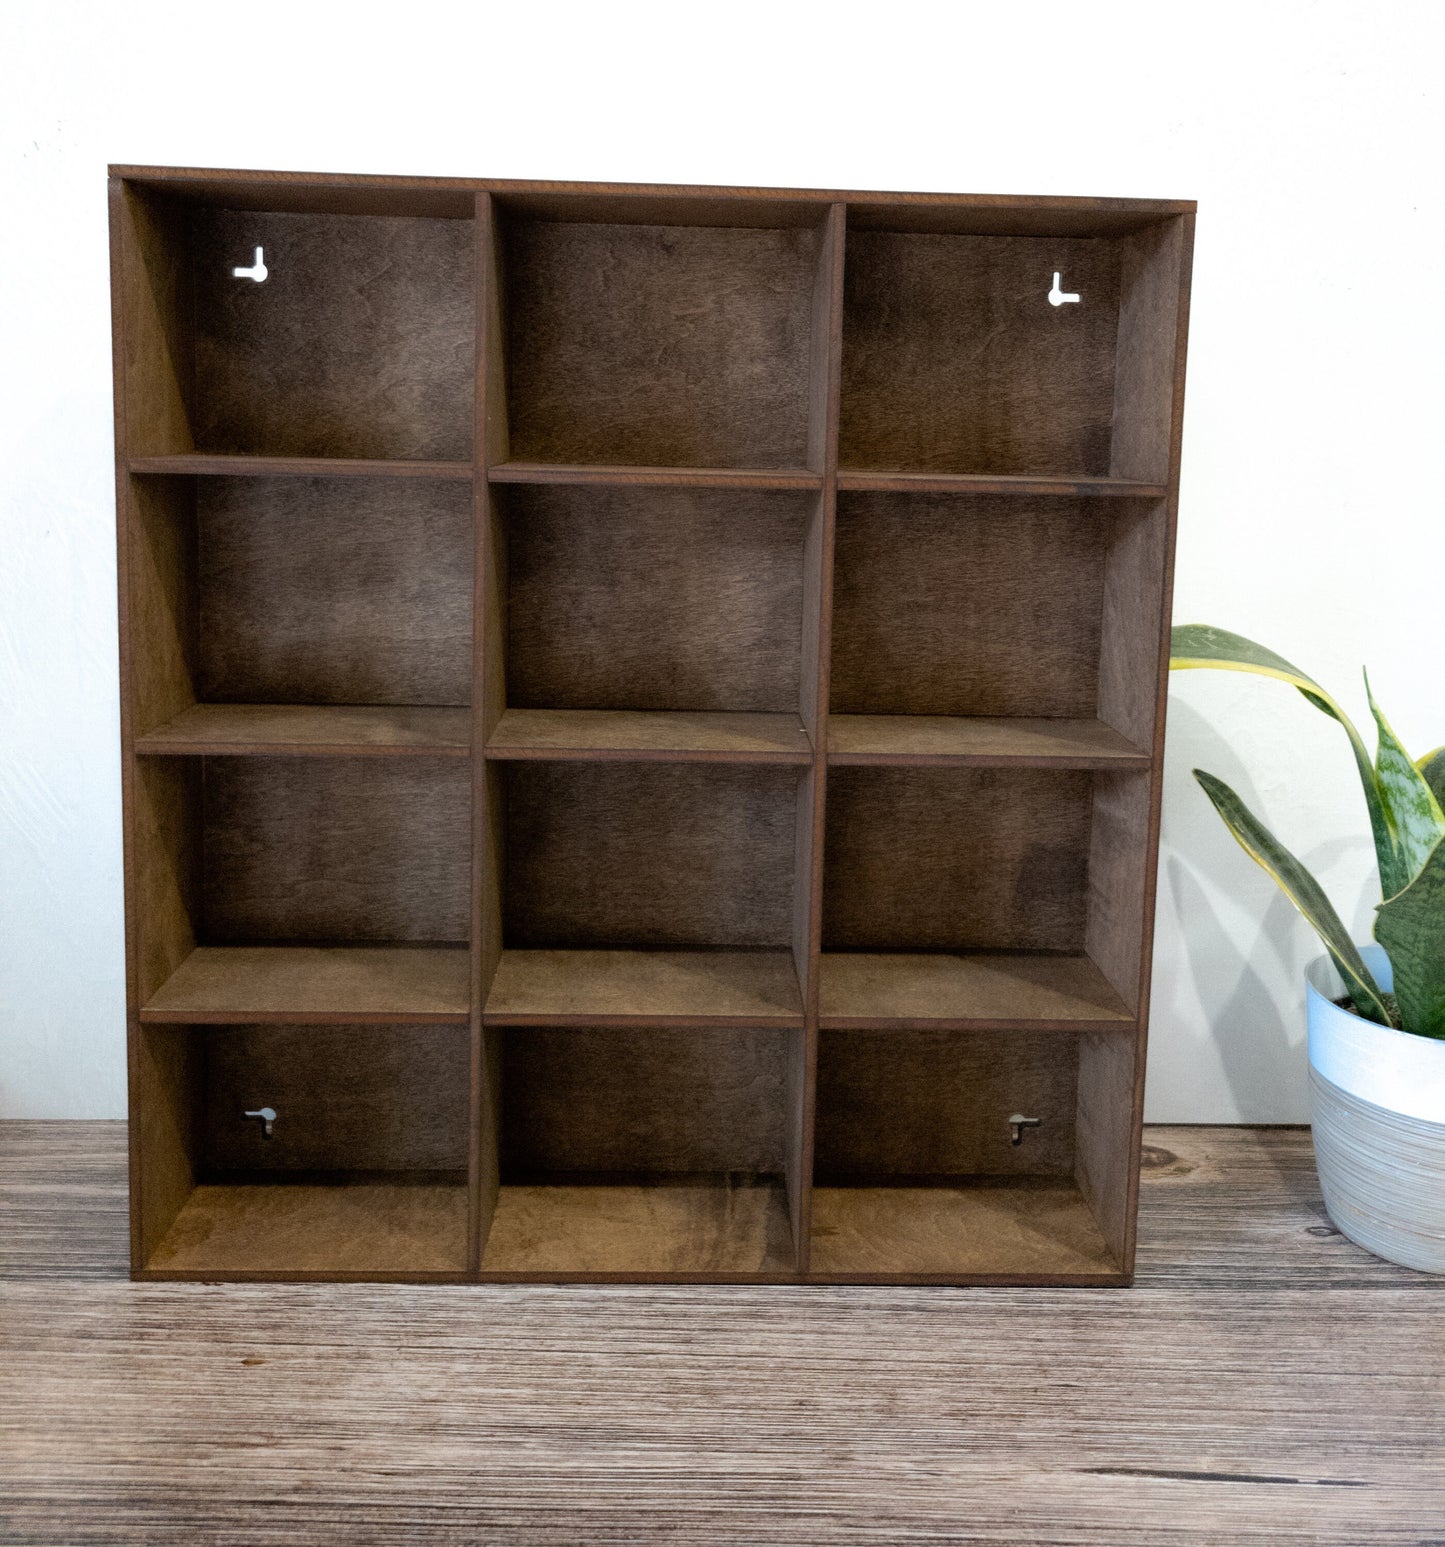 12 Compartment Wooden Display Shelf- Trinket ShelfCurio Cabinet- Knick Knack Collection Display - Printer Tray -Figure Organizer Display